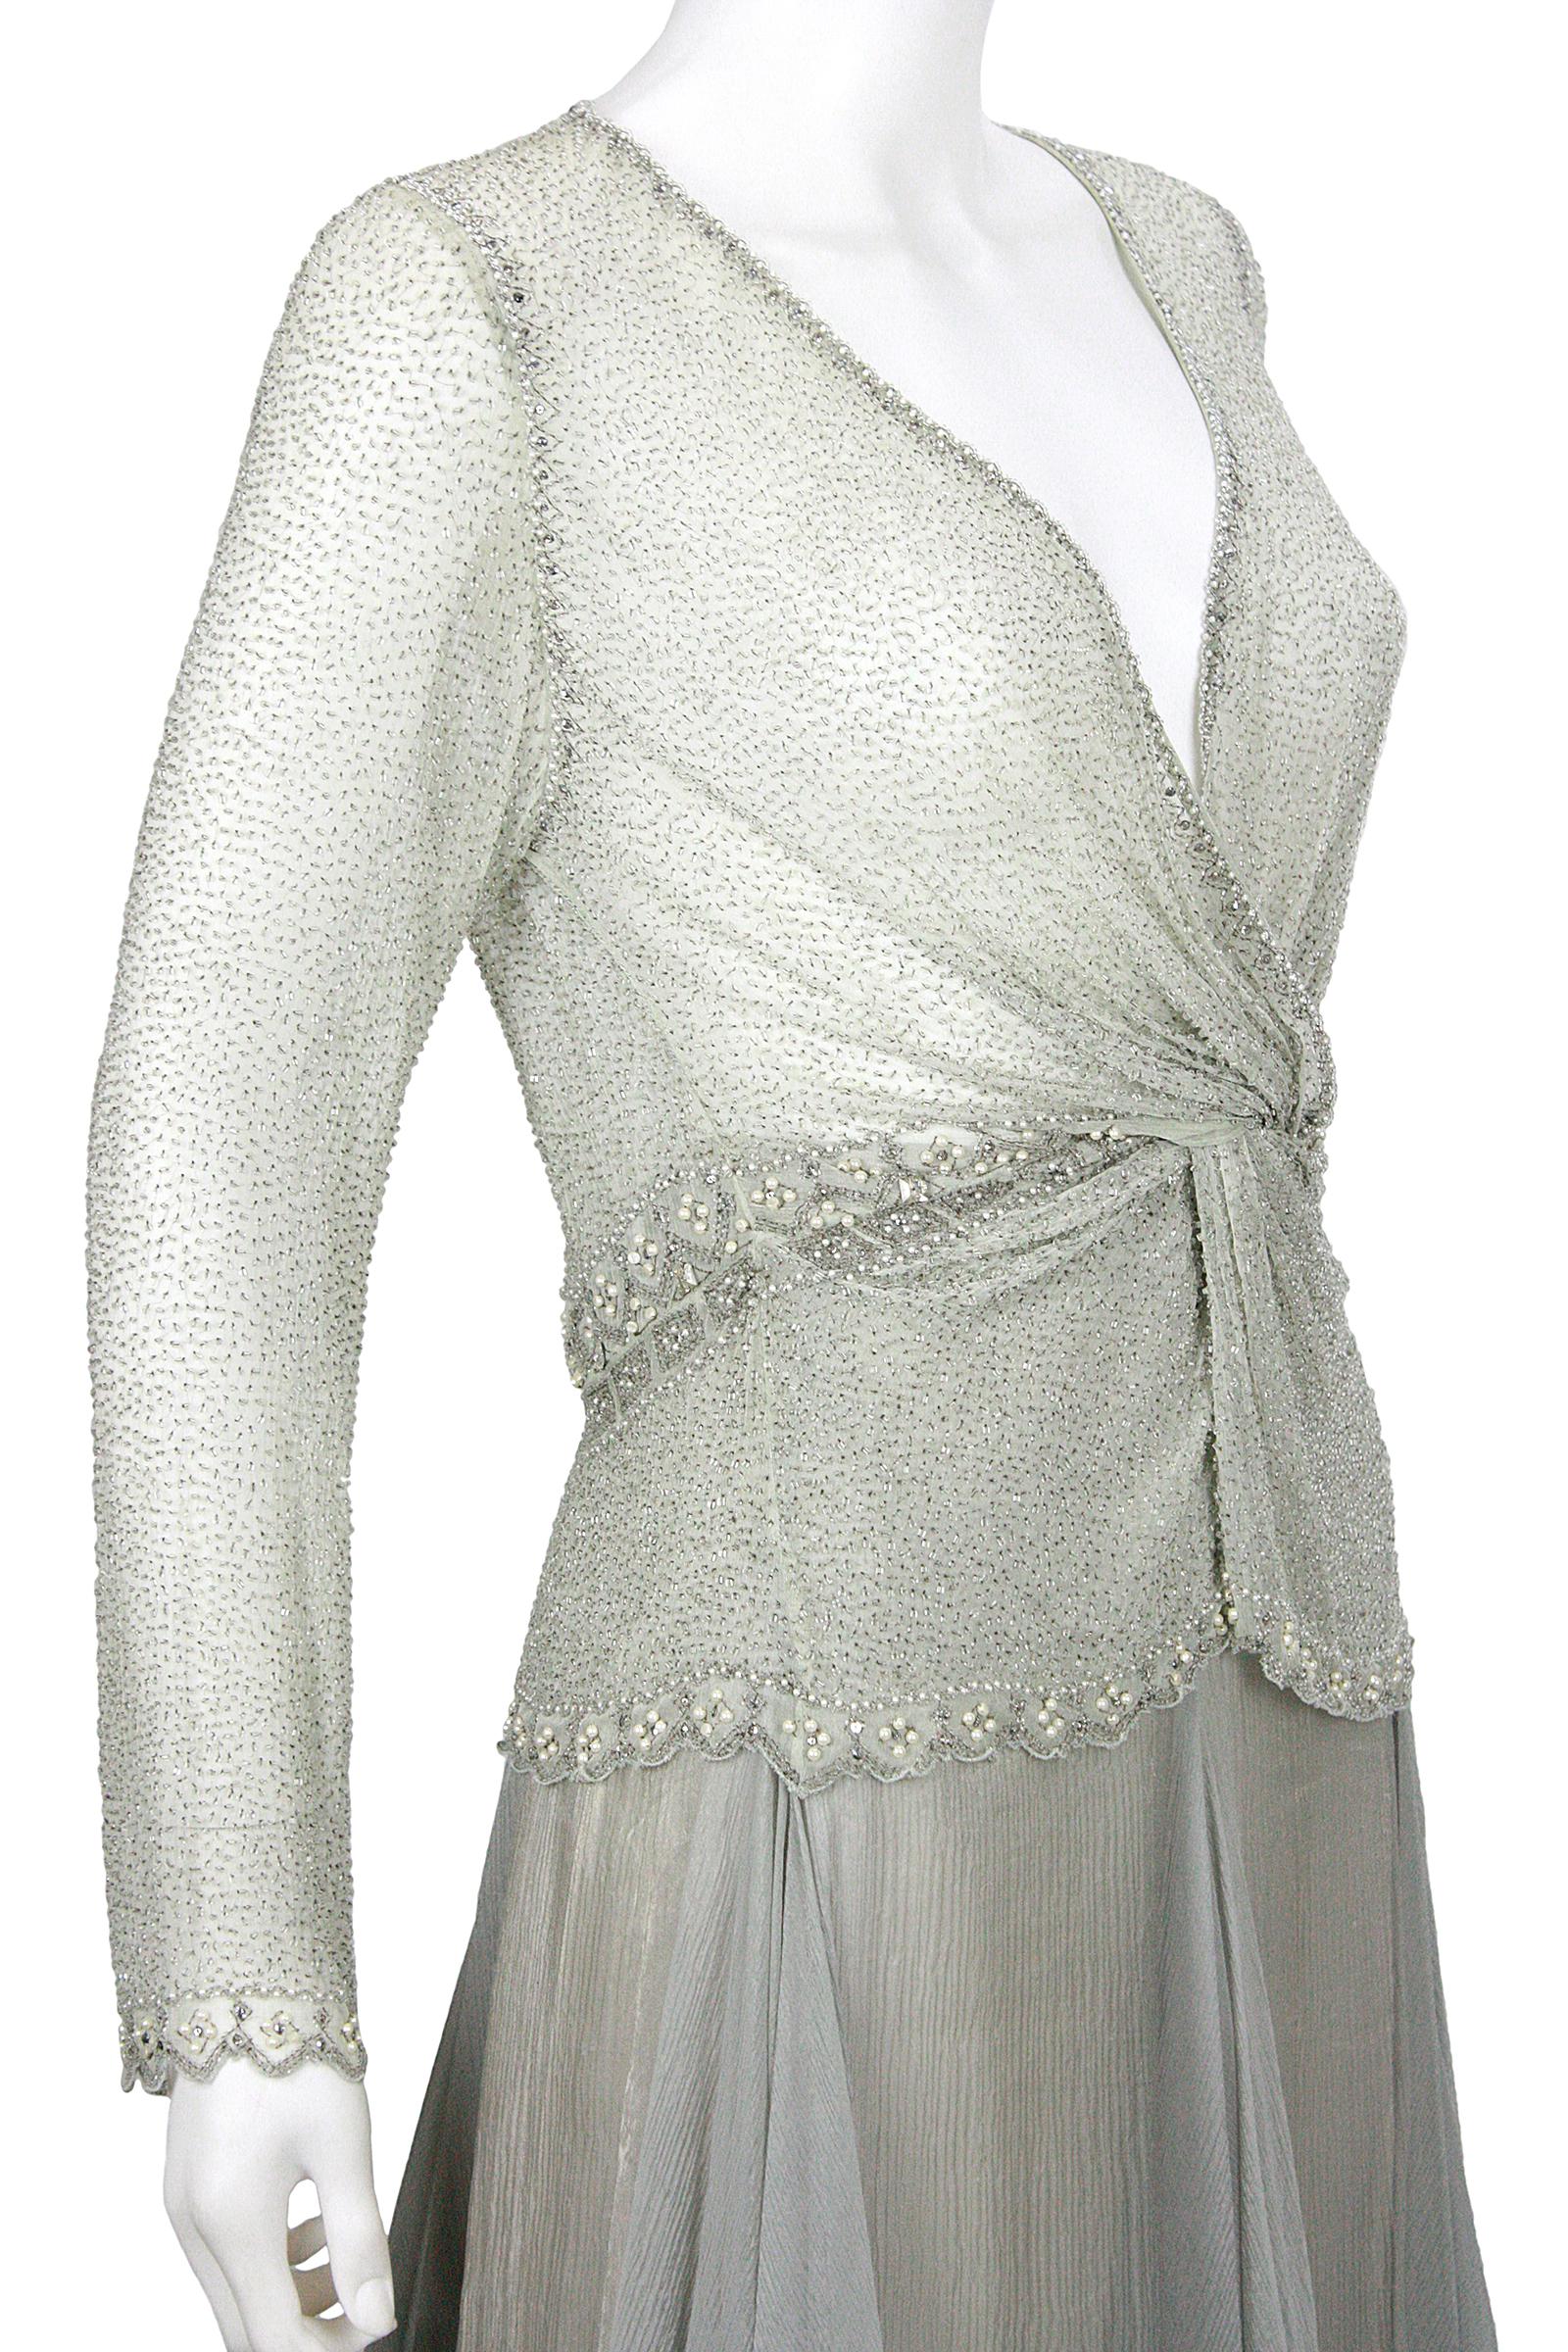 Women's Eavis & Brown London Seafoam Chiffon Beaded Top and Long Silver Skirt  For Sale